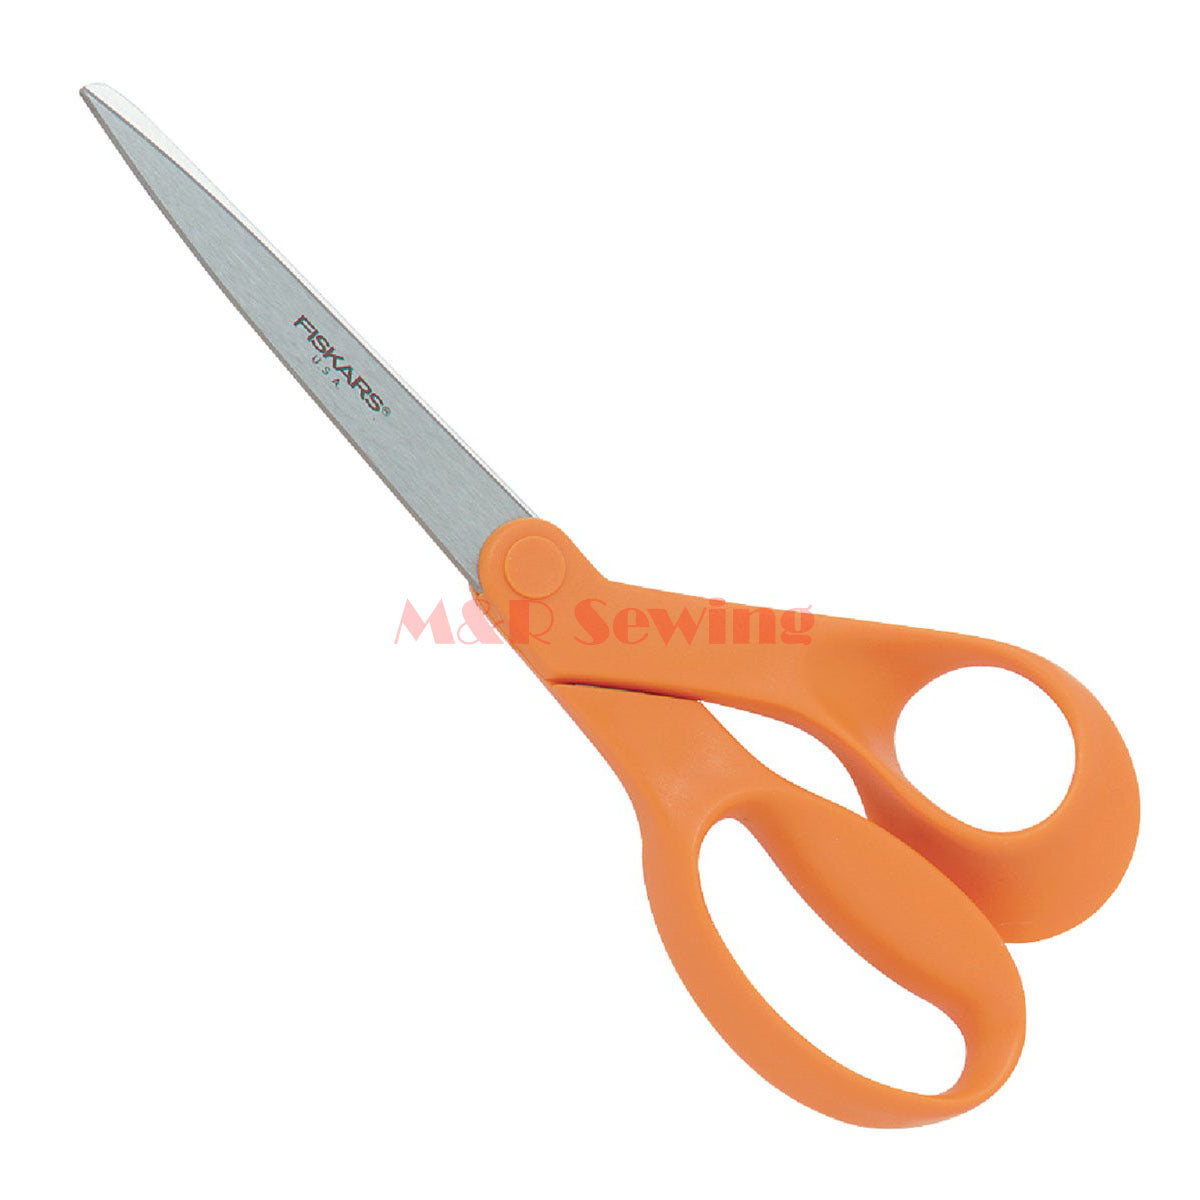 Fiskar's 8" Bent Scissors